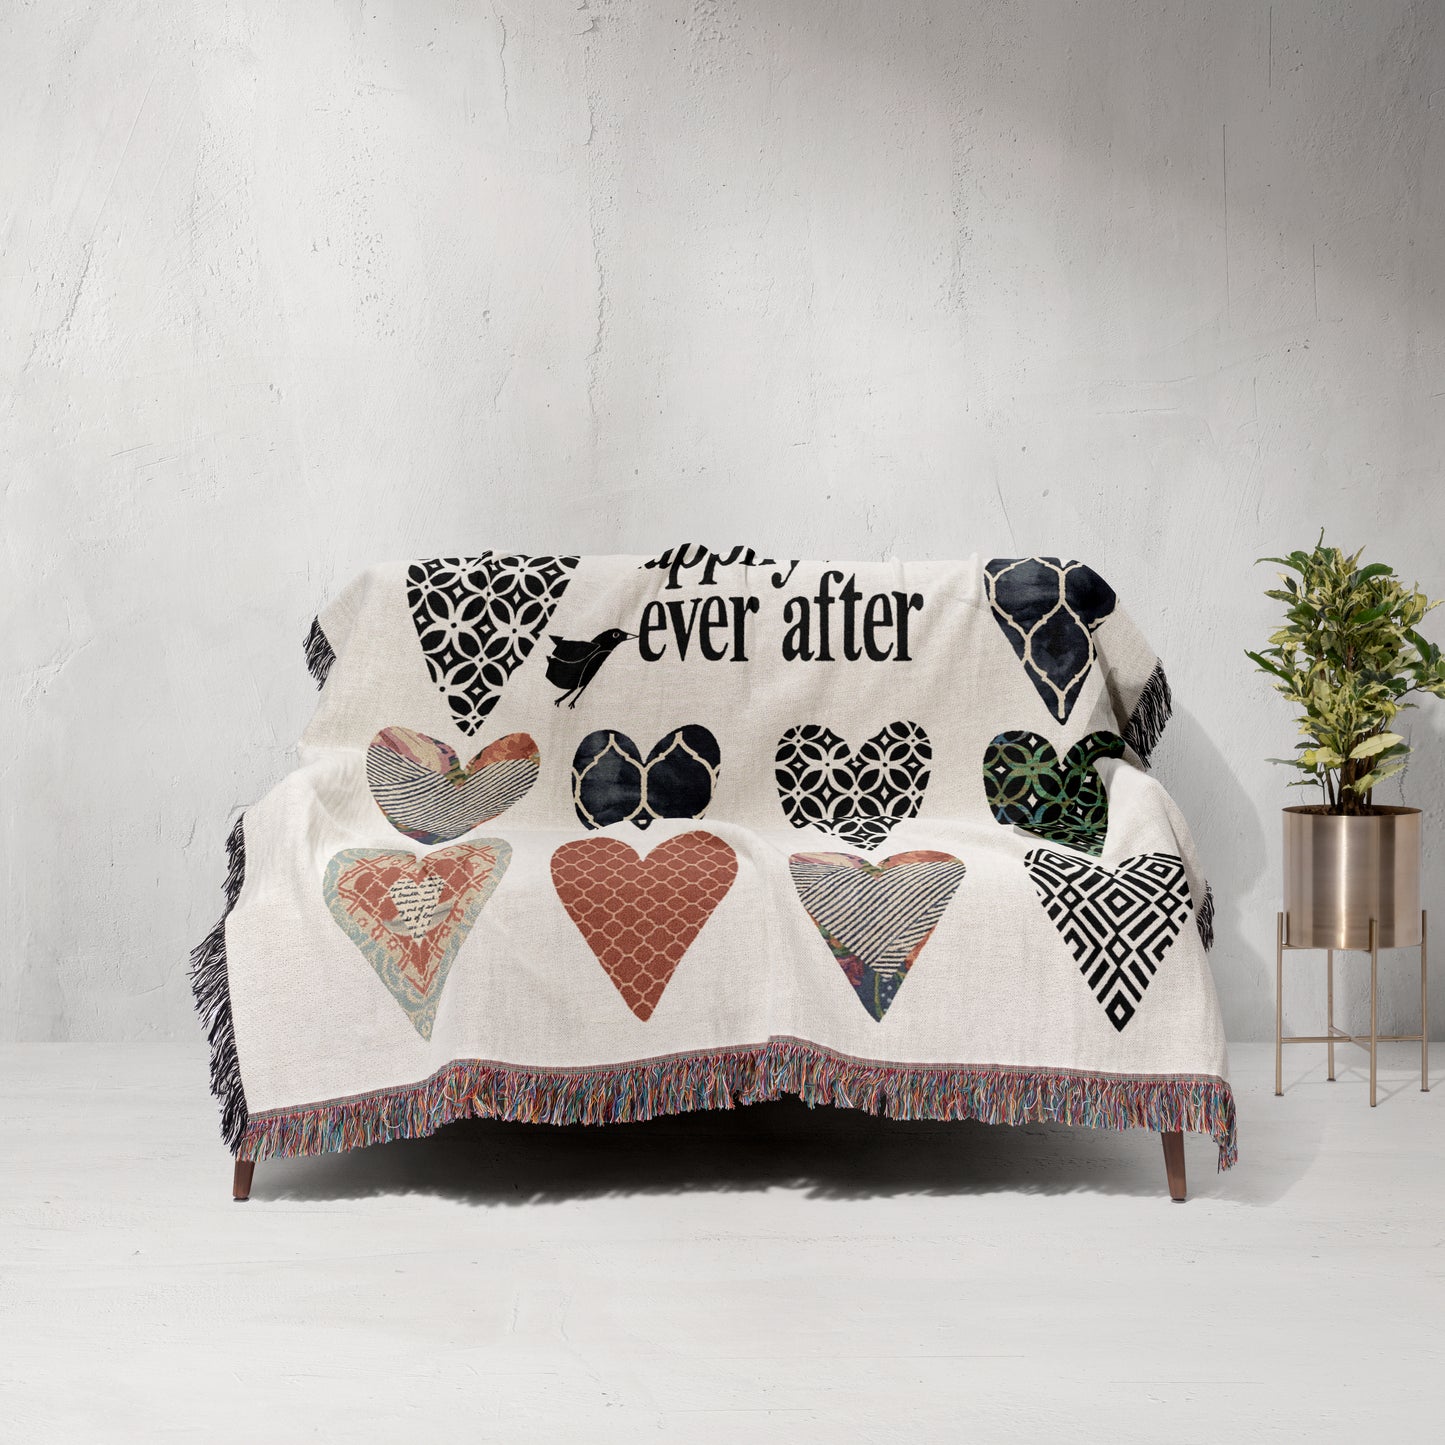 Personalized Woven Wedding Blanket | Heart Grid design by Museware creator Sheree Burlington